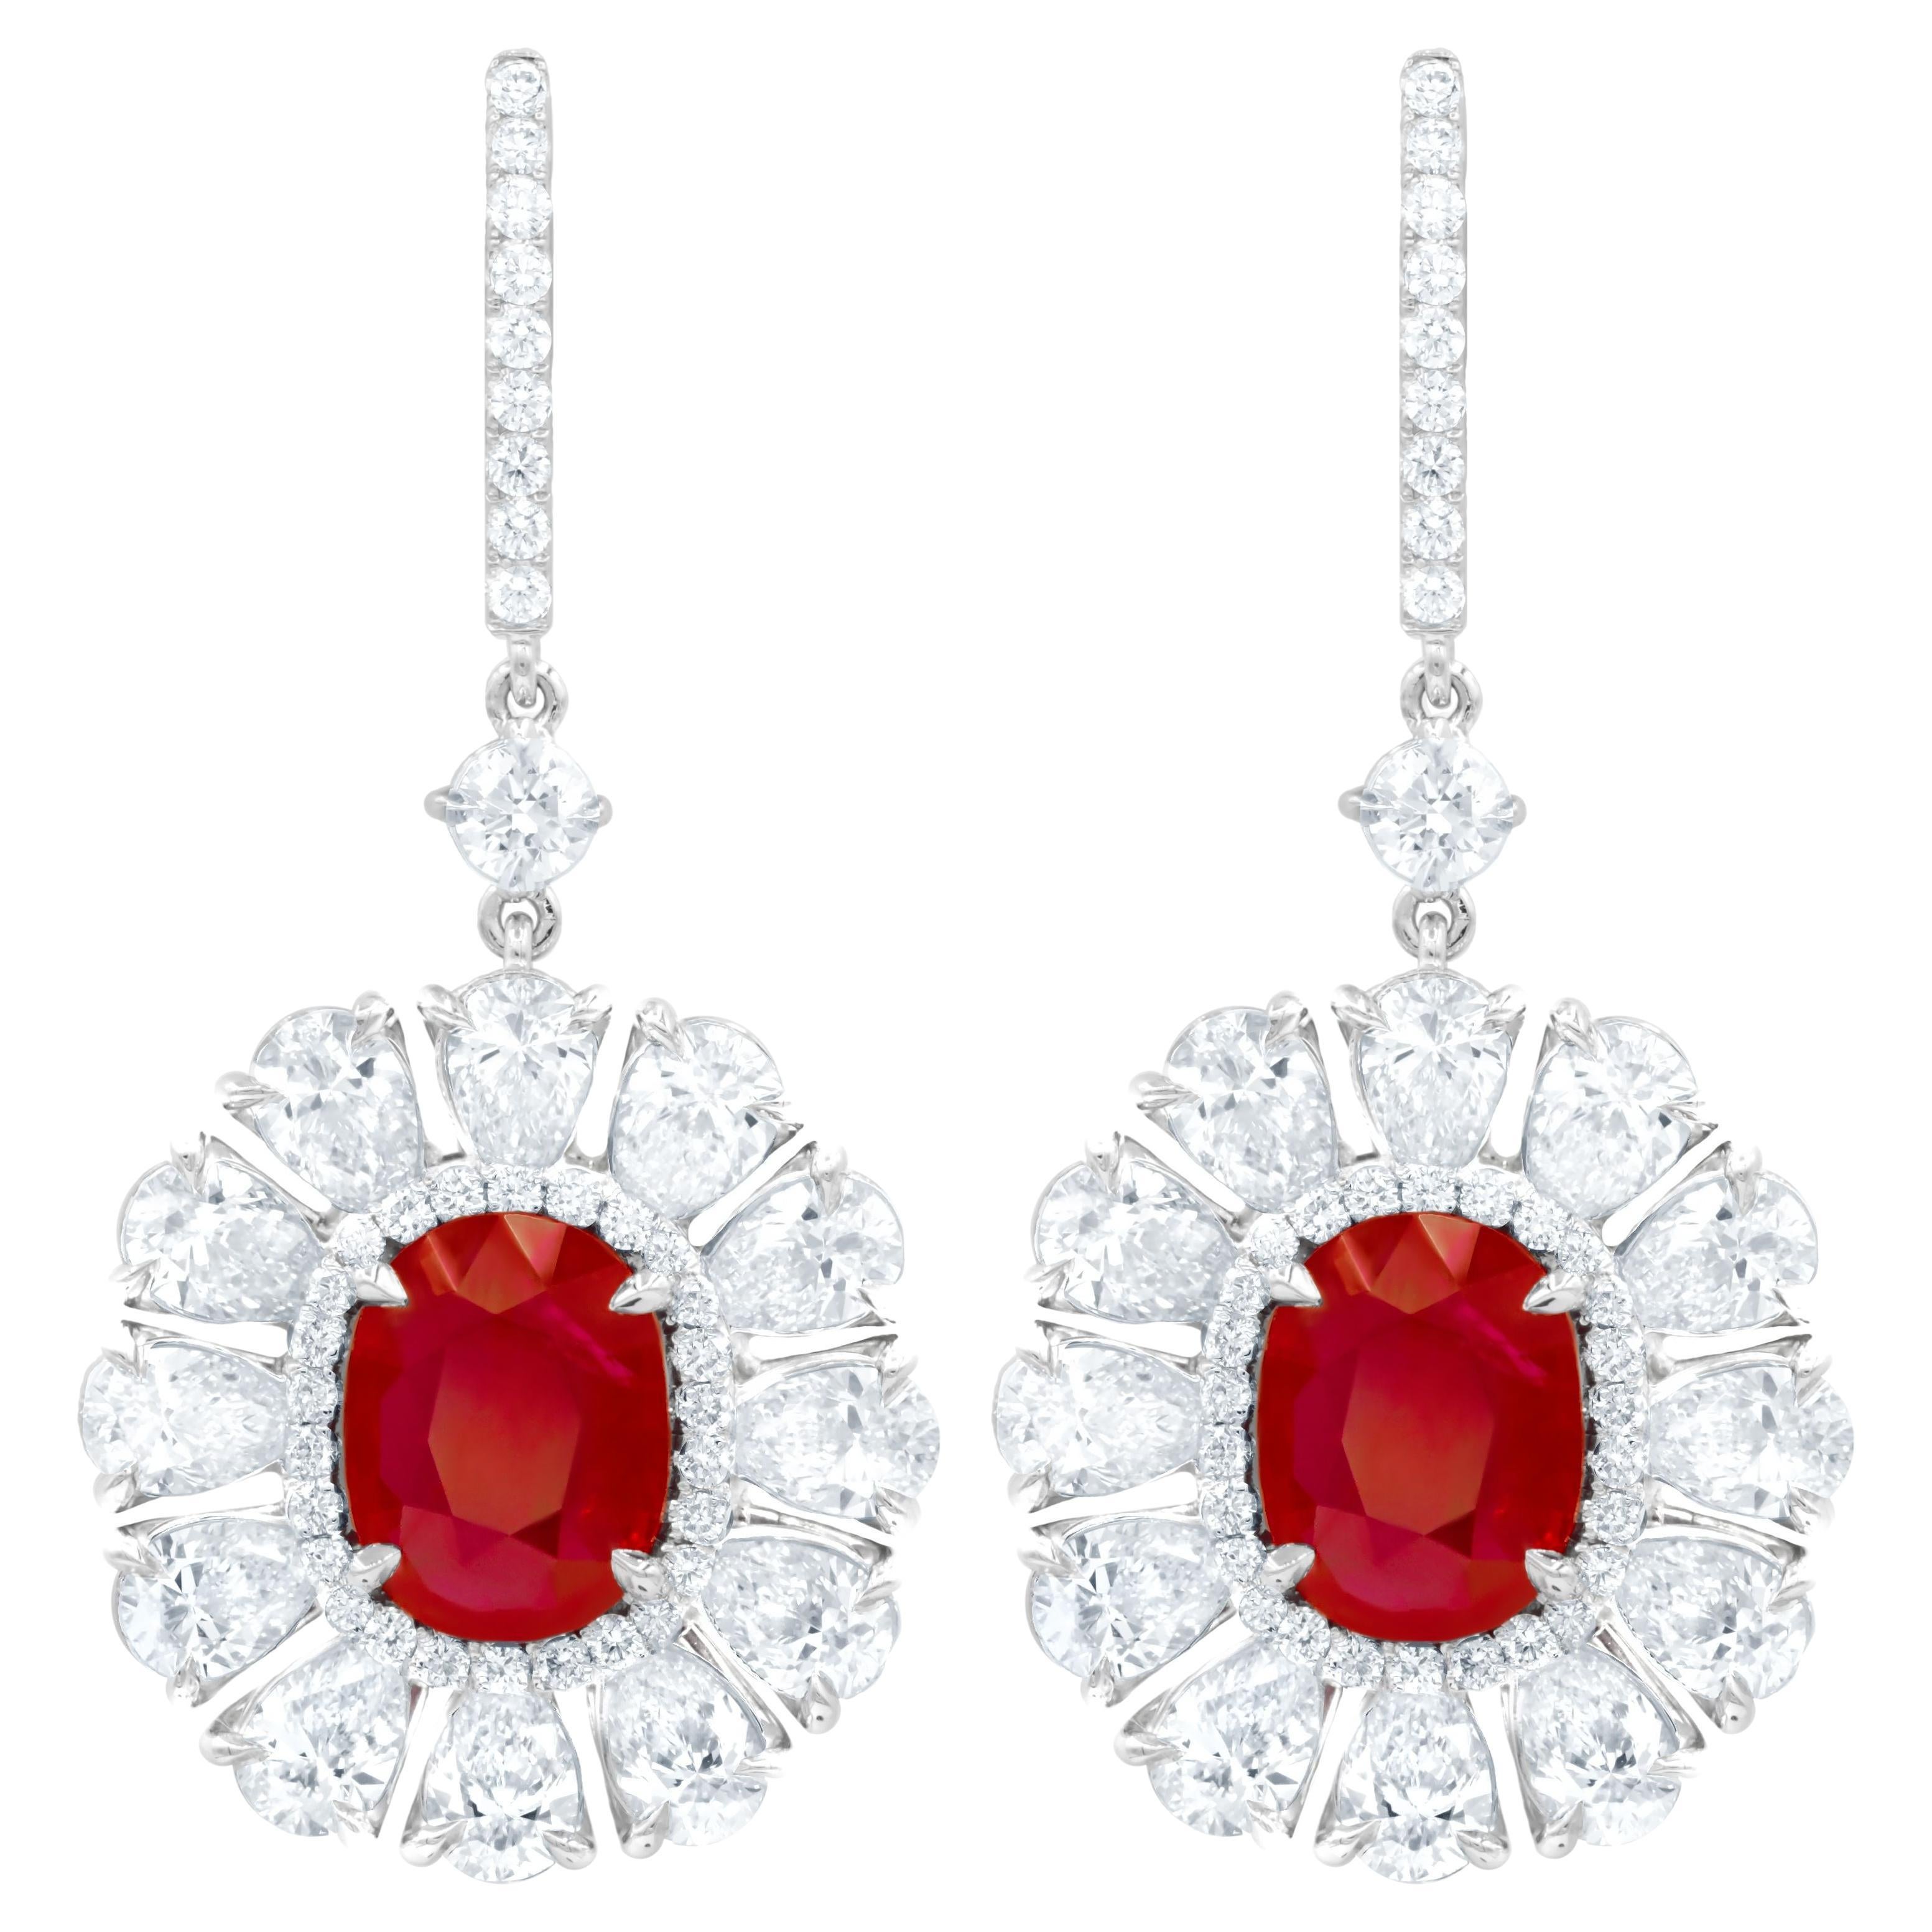 Diana M. 6.69 Carat Ruby Set in Diamond Halo Flower Shaped Earrings For Sale